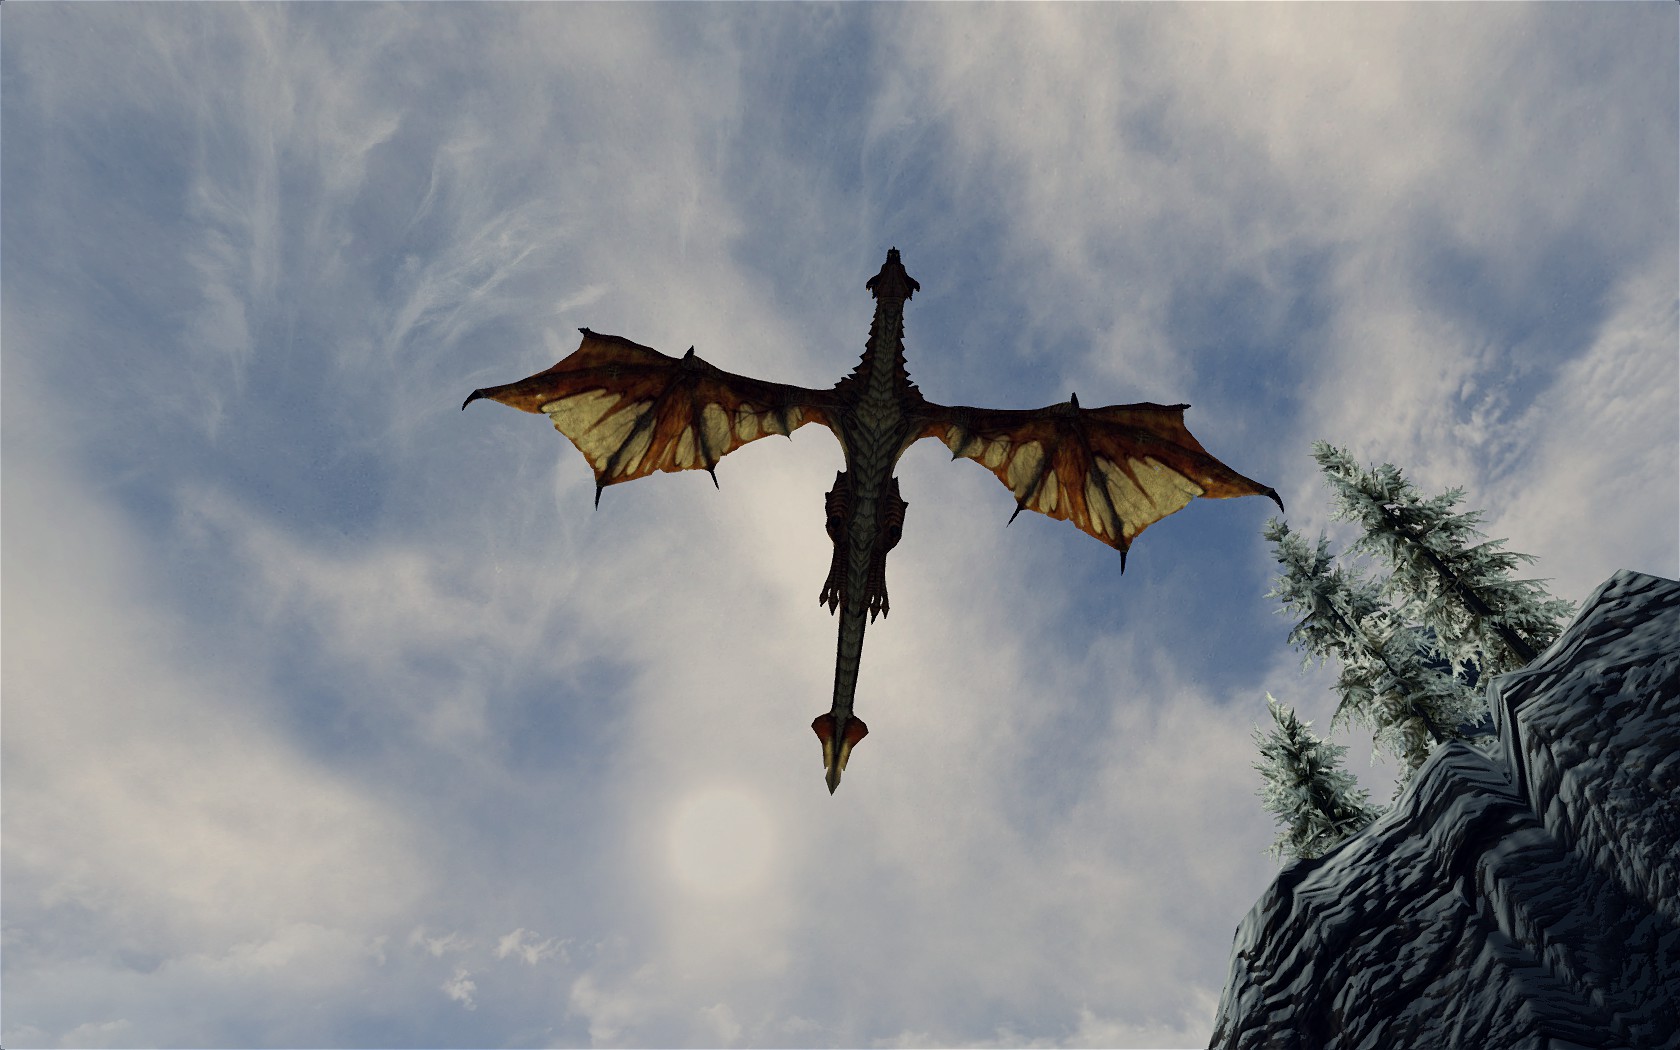 https://orig00.deviantart.net/0edd/f/2016/170/b/d/an_elder_dragon_flying_over_by_iamjcat-da6wvc3.jpg